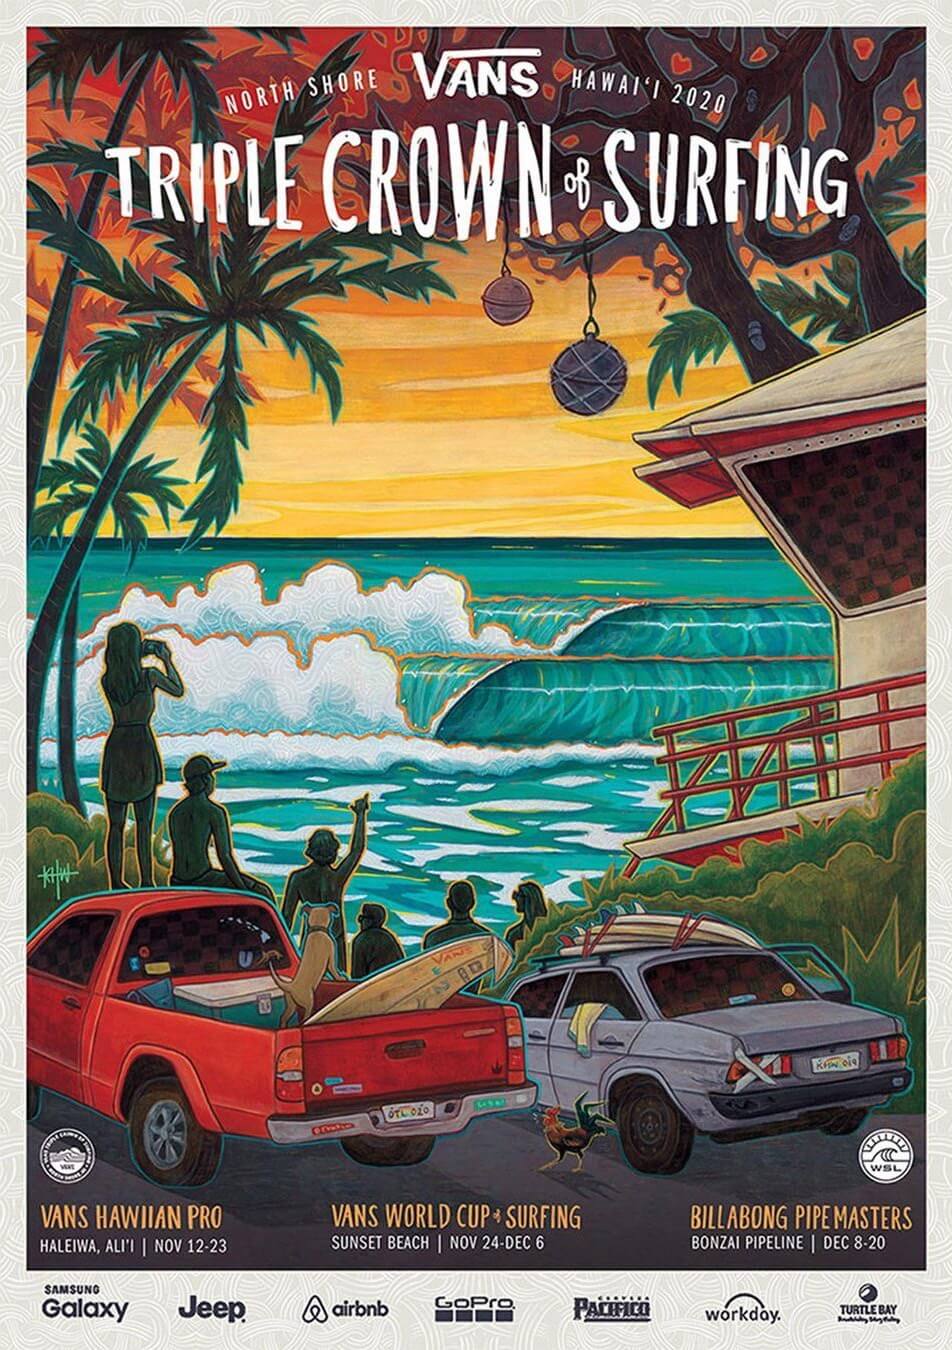 2020 Vans Triple Crown of Surfing poster by artist, Kate Wadsworth